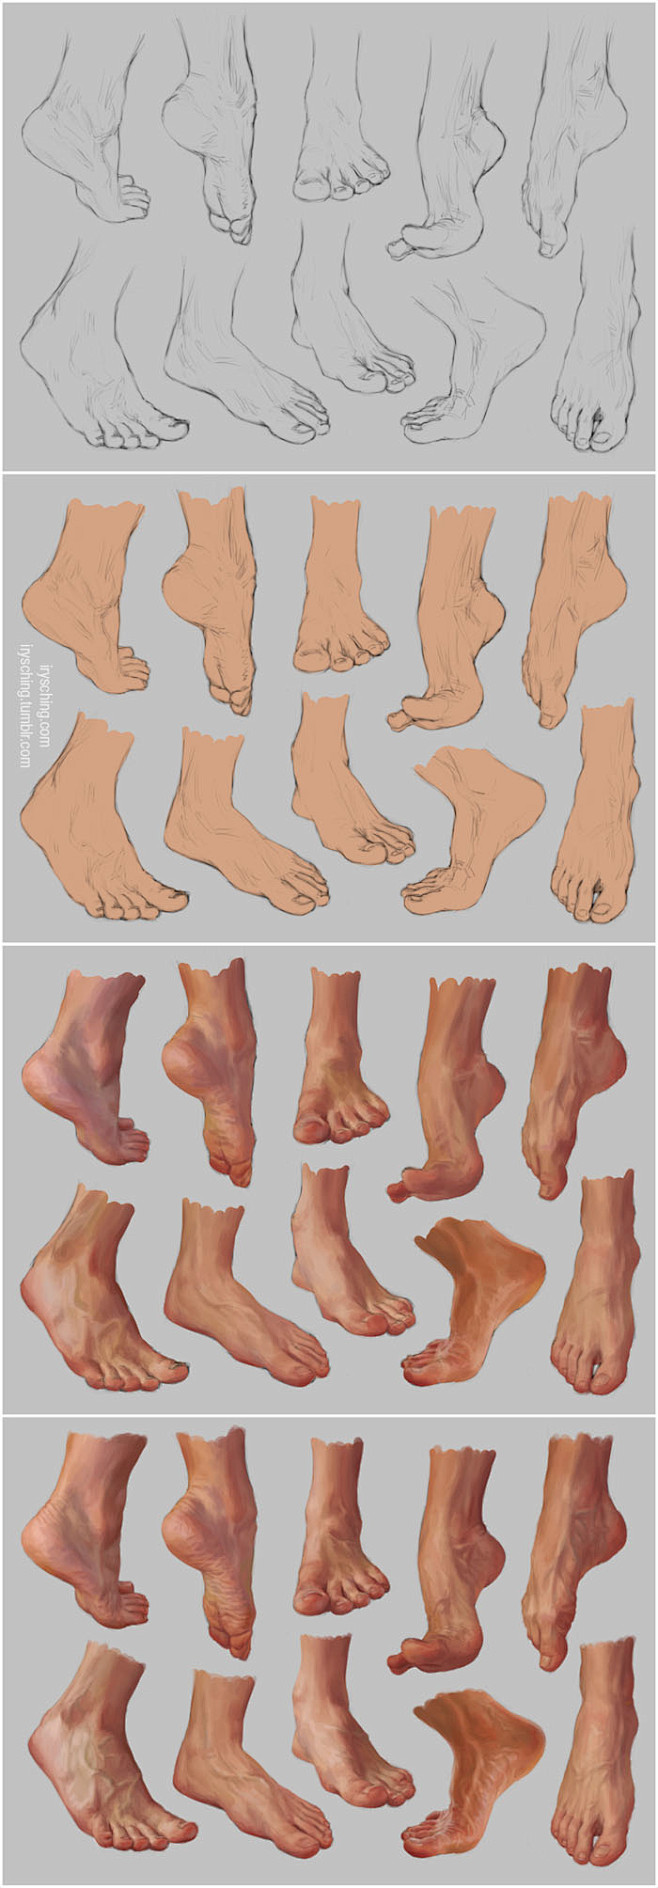 Feet Study 2 - Steps...